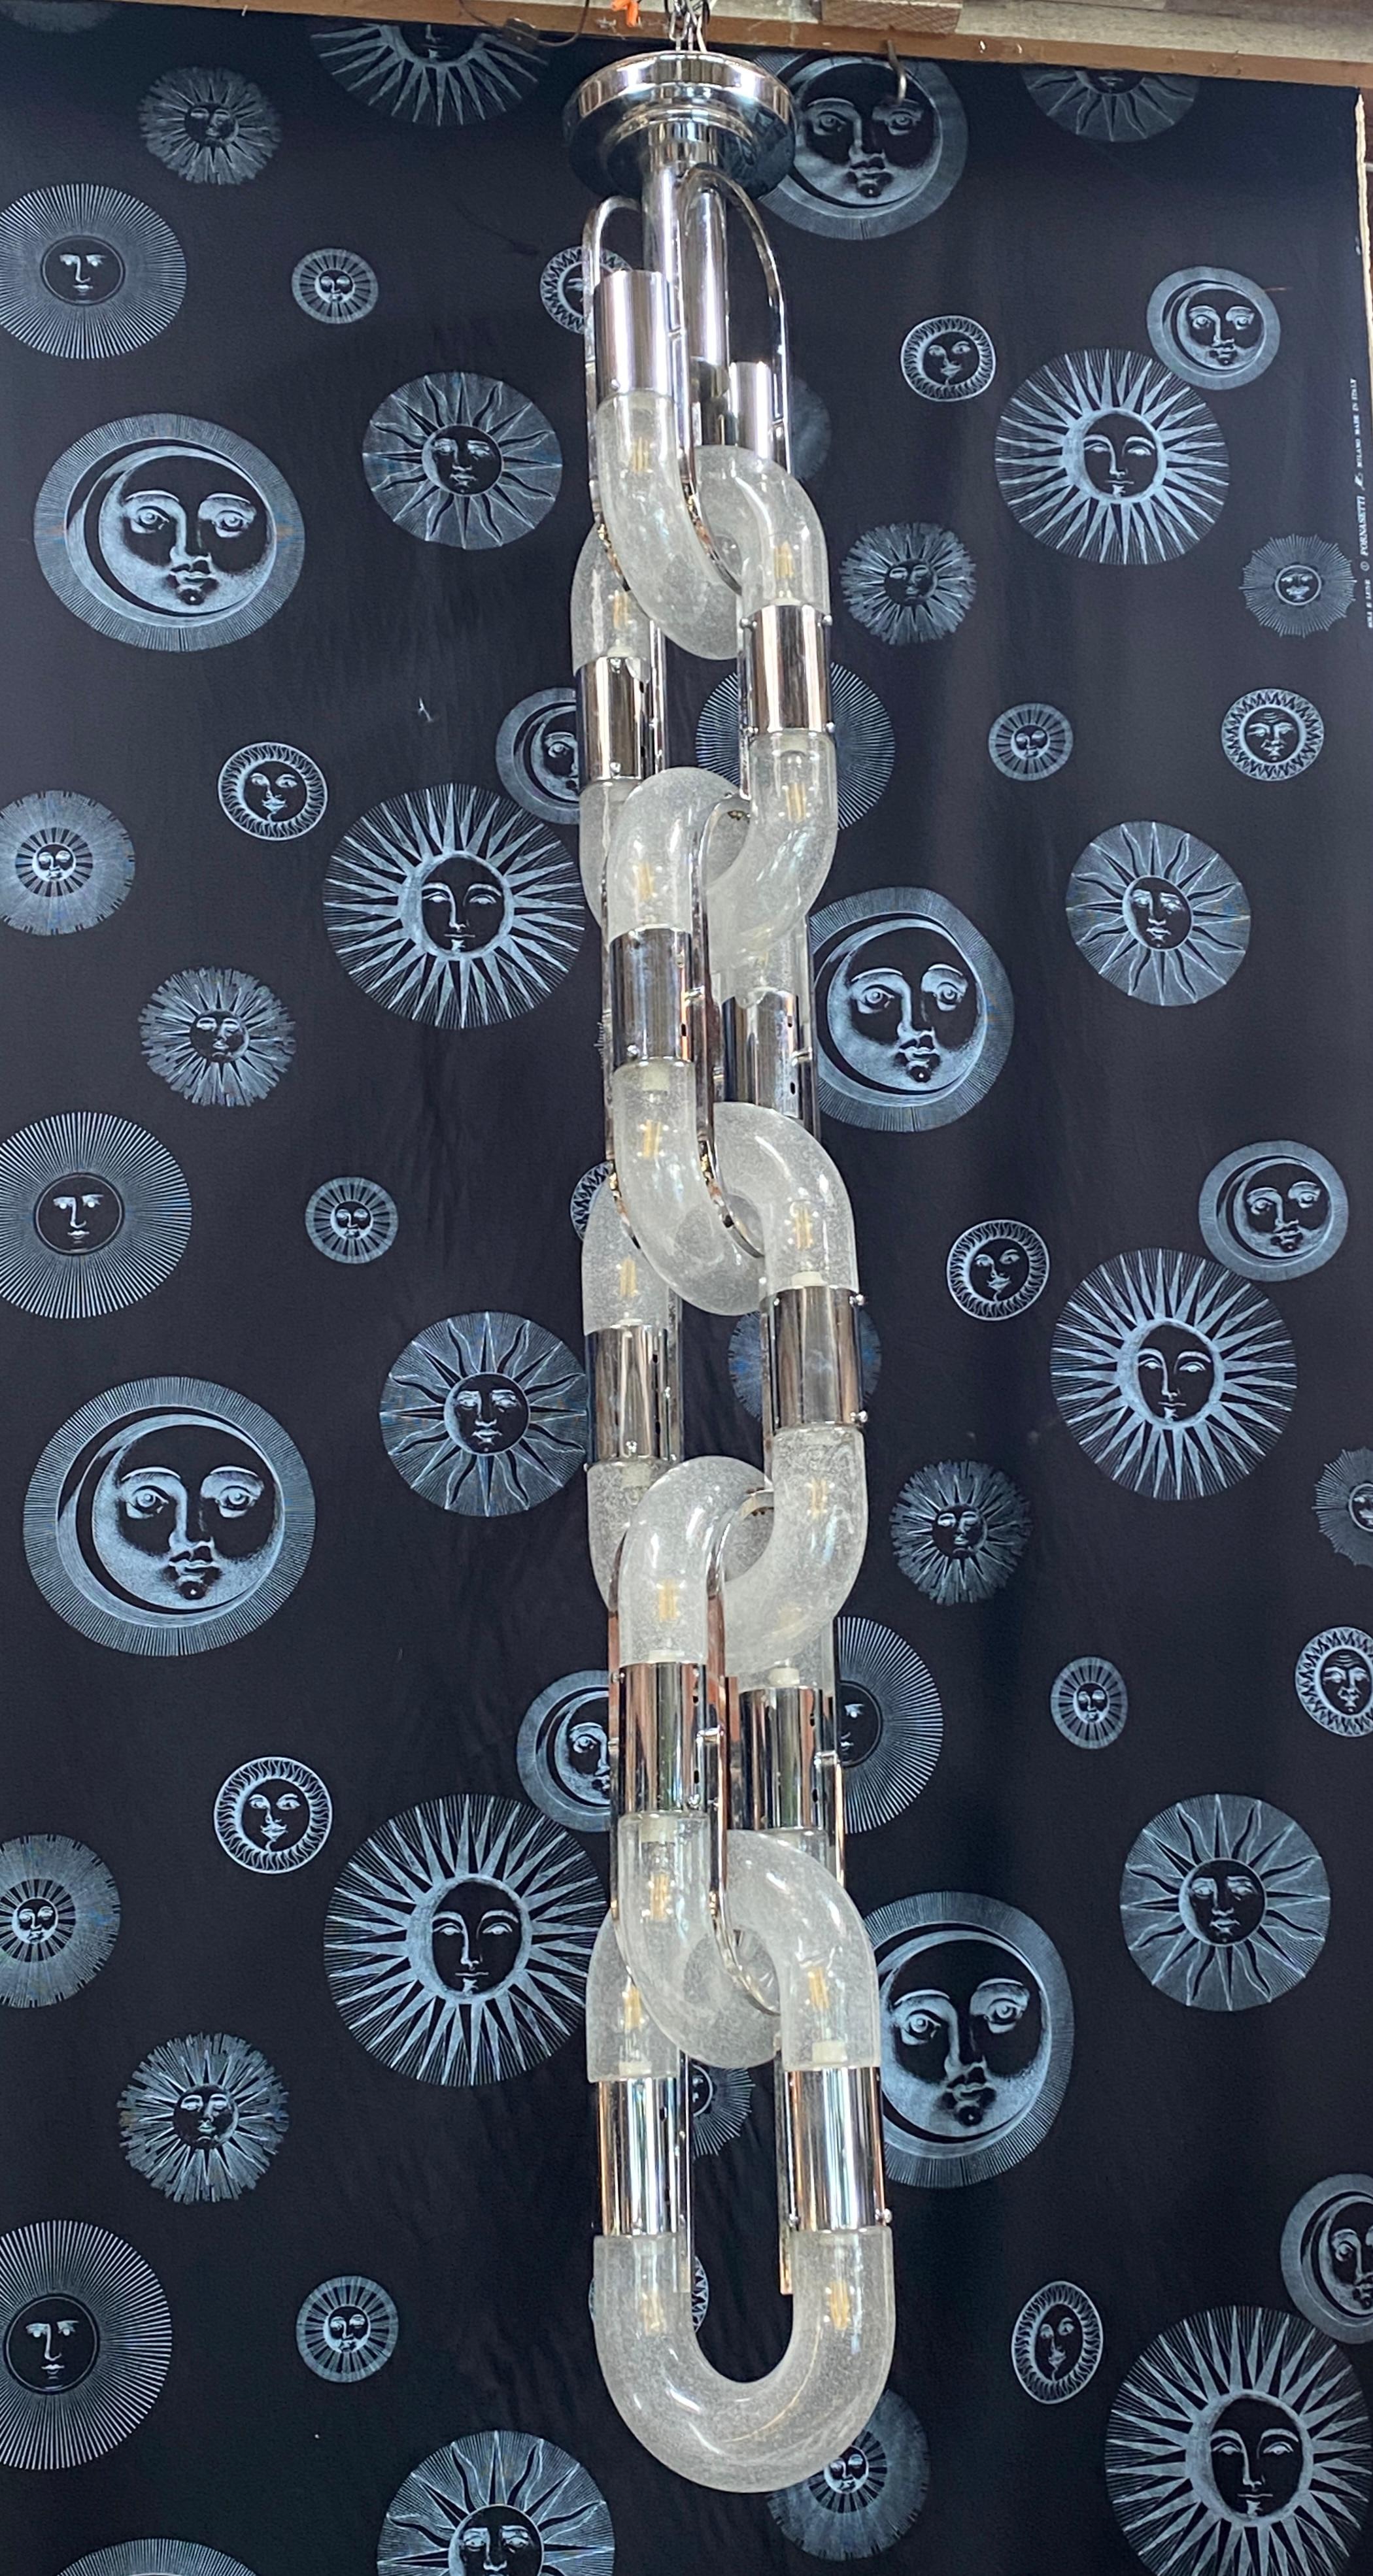 Outstanding chain chandelier ceiling pendant light lamp 6 rings by Aldo Nason for the manufacture Mazzega Murano. Blown bubble Murano glass. Famous manufacture like Venini, Vistosi, La Murrina, Seguso, Carlo Nason, Poliarte.
Nothing touches,